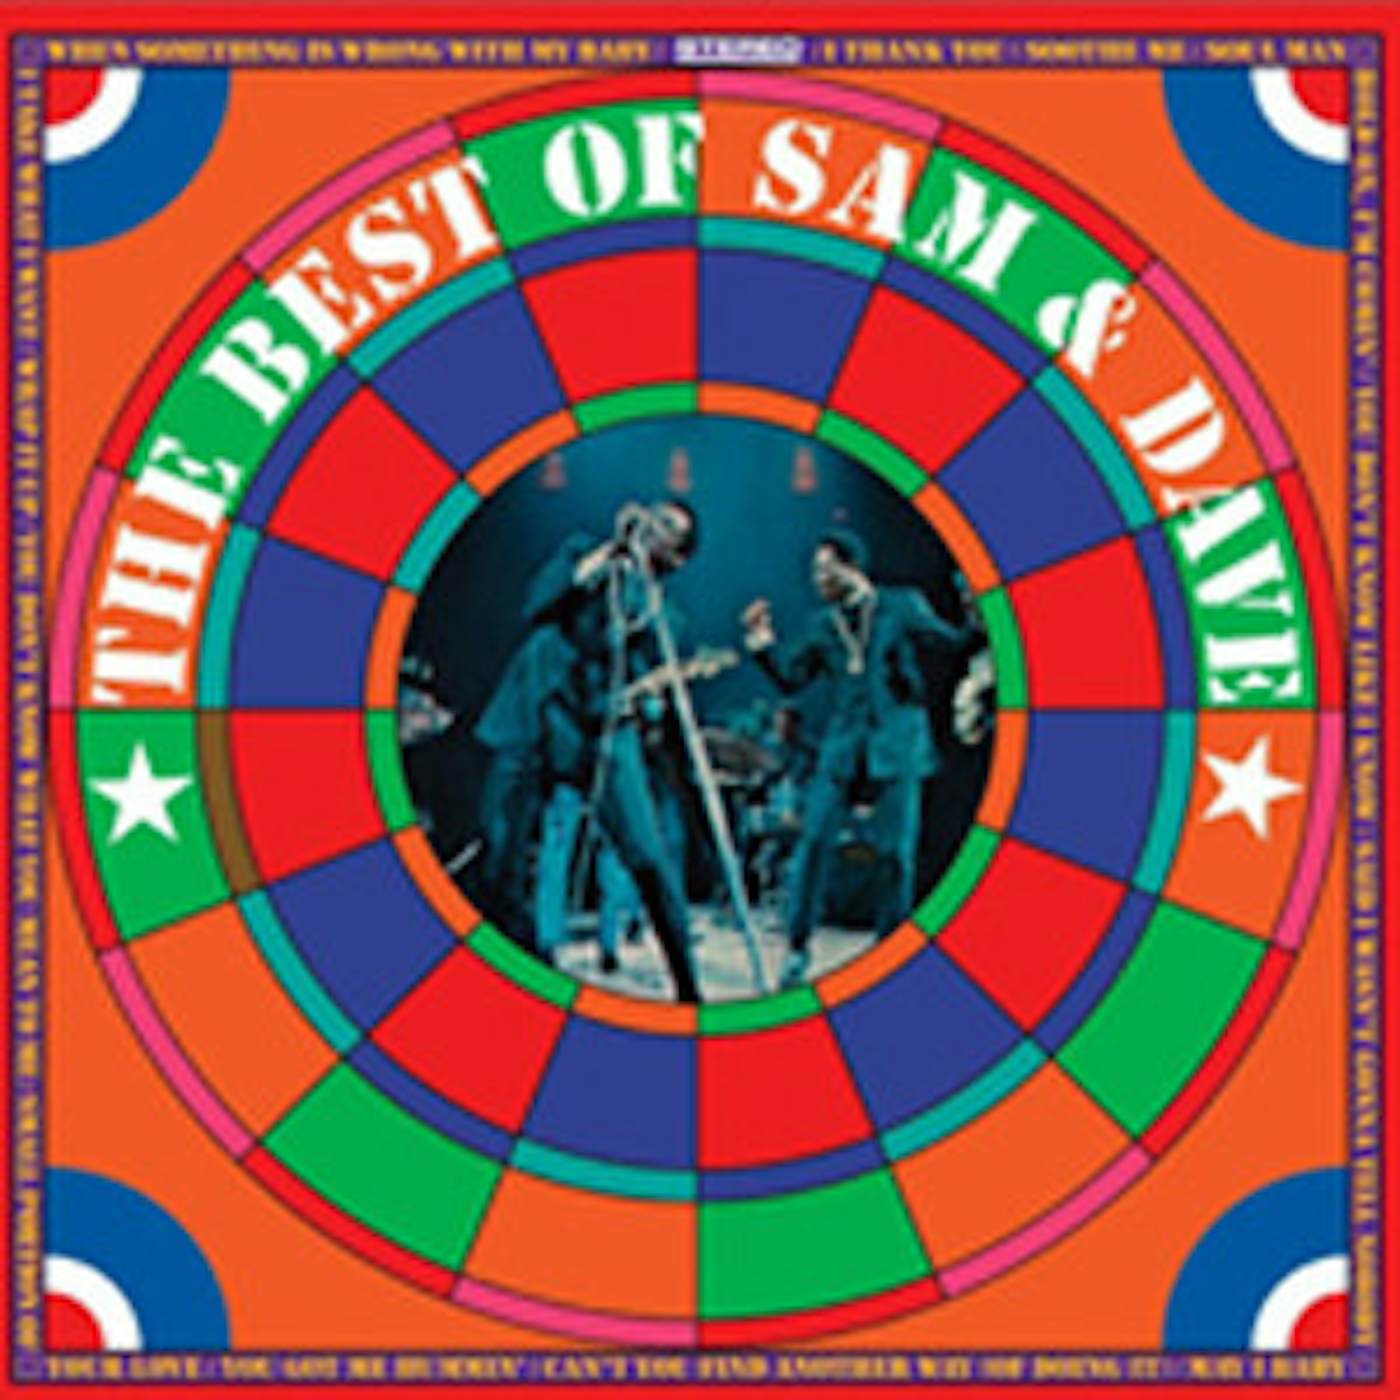 BEST OF SAM & DAVE Vinyl Record